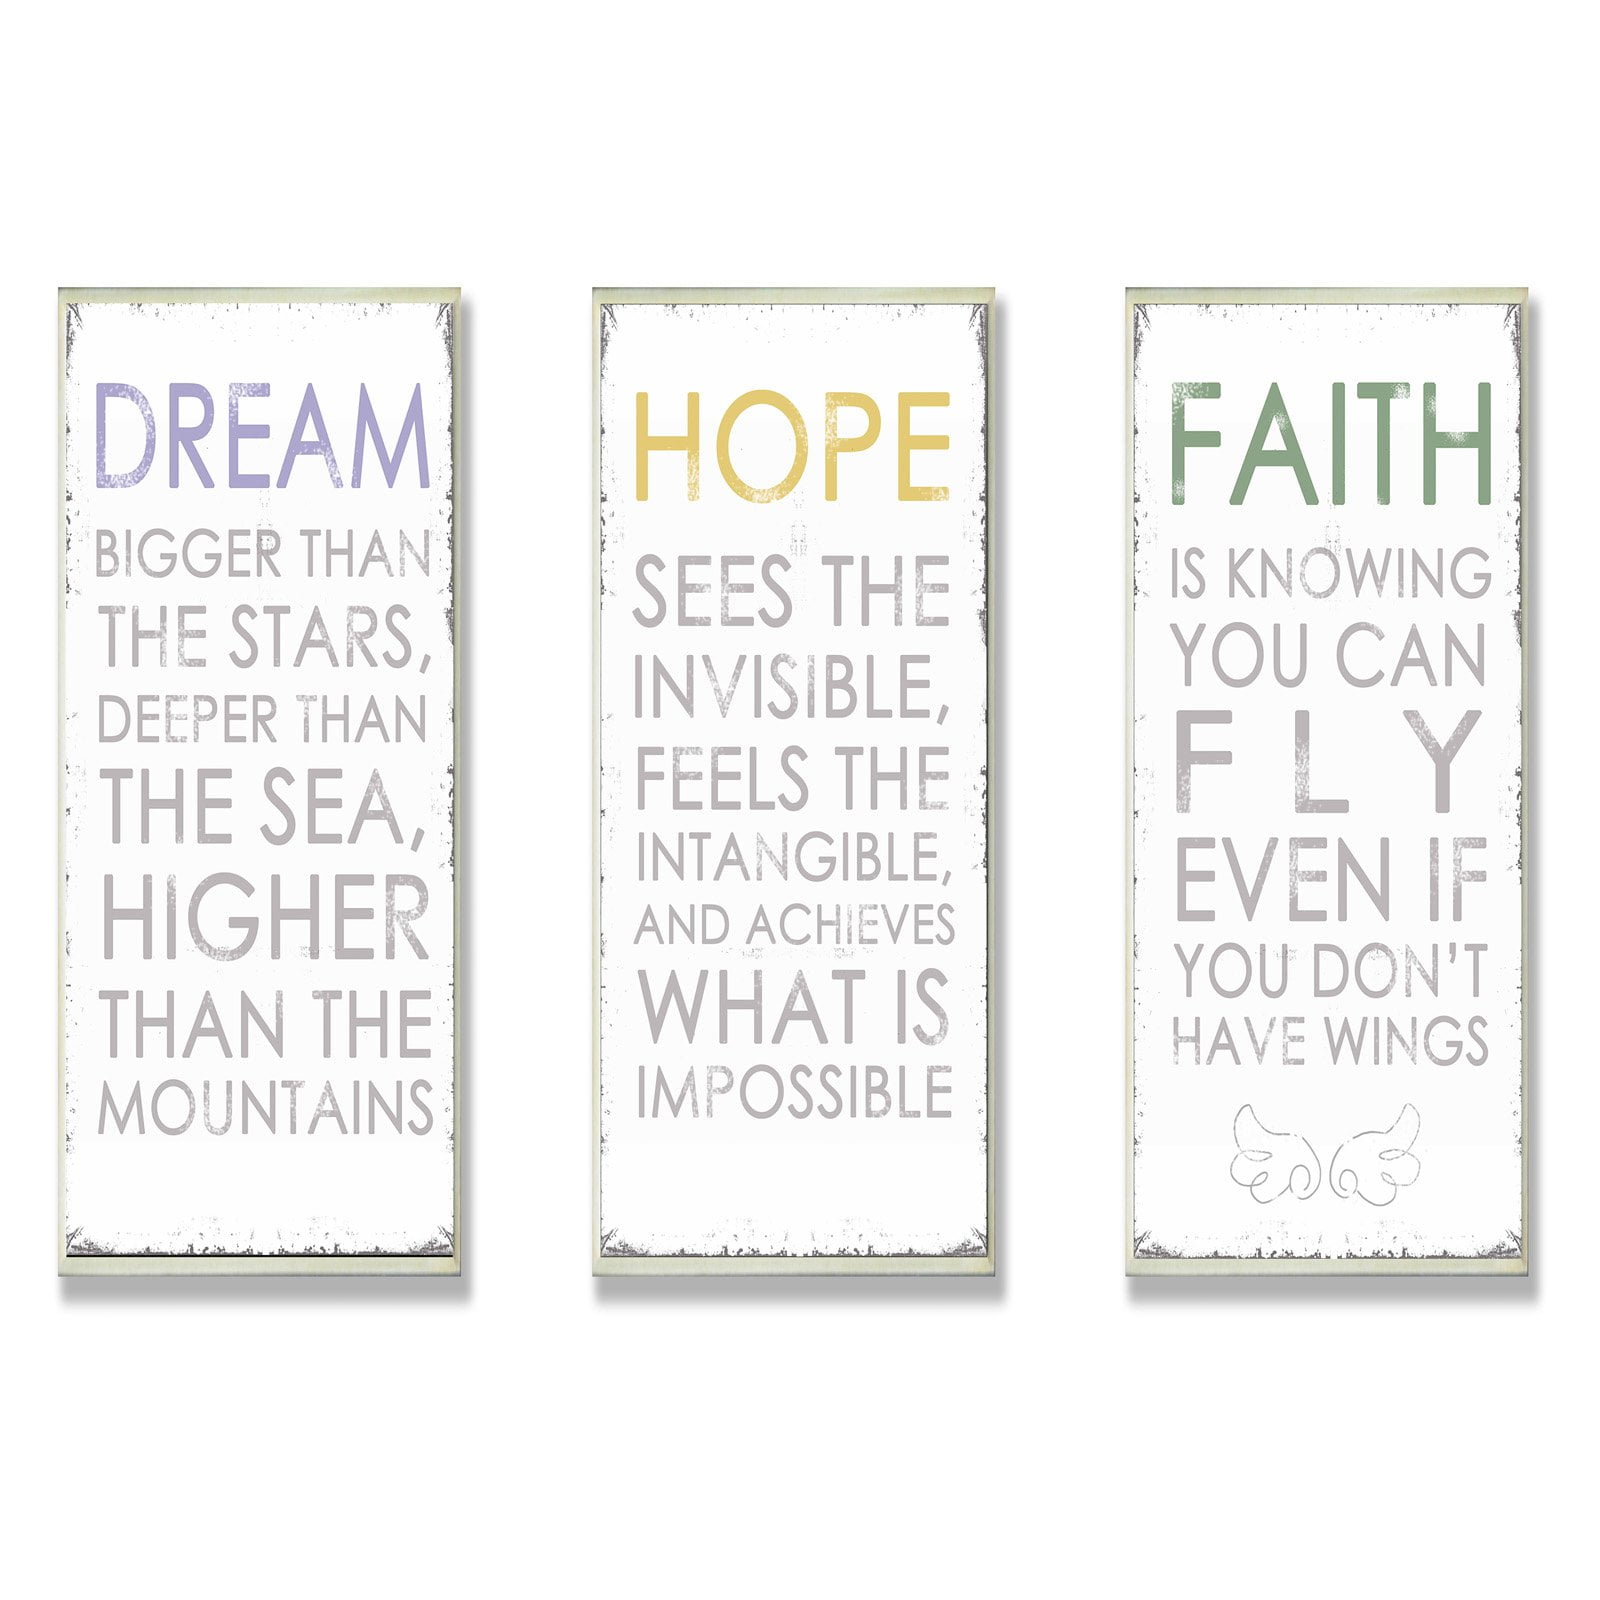 Cottage Garden Believe Faith is Hope 8x10 Woodgrain Framed Art Wall Plaque Sign